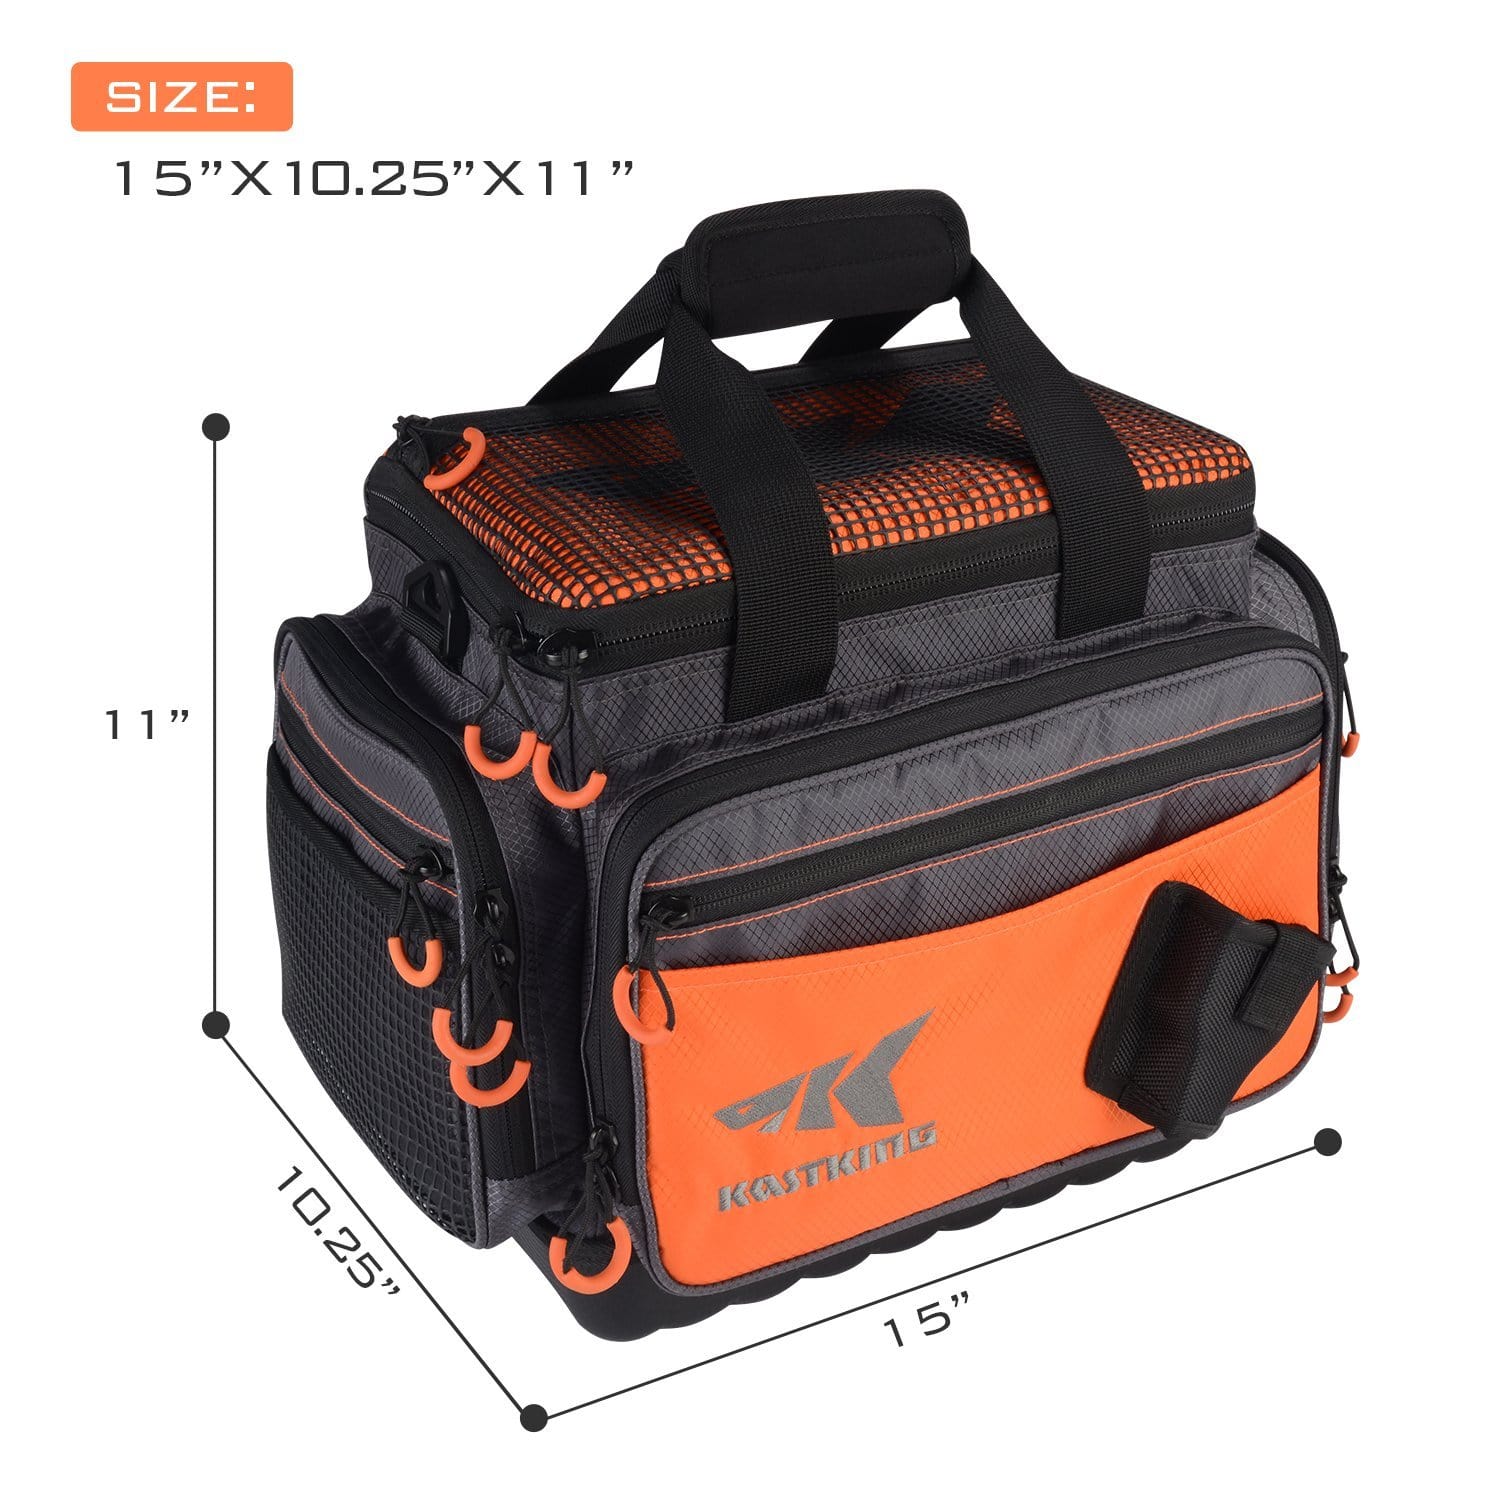 KastKing Fishing Tackle Bags - Hoss (15”x 11”x 10.25”) / Orange